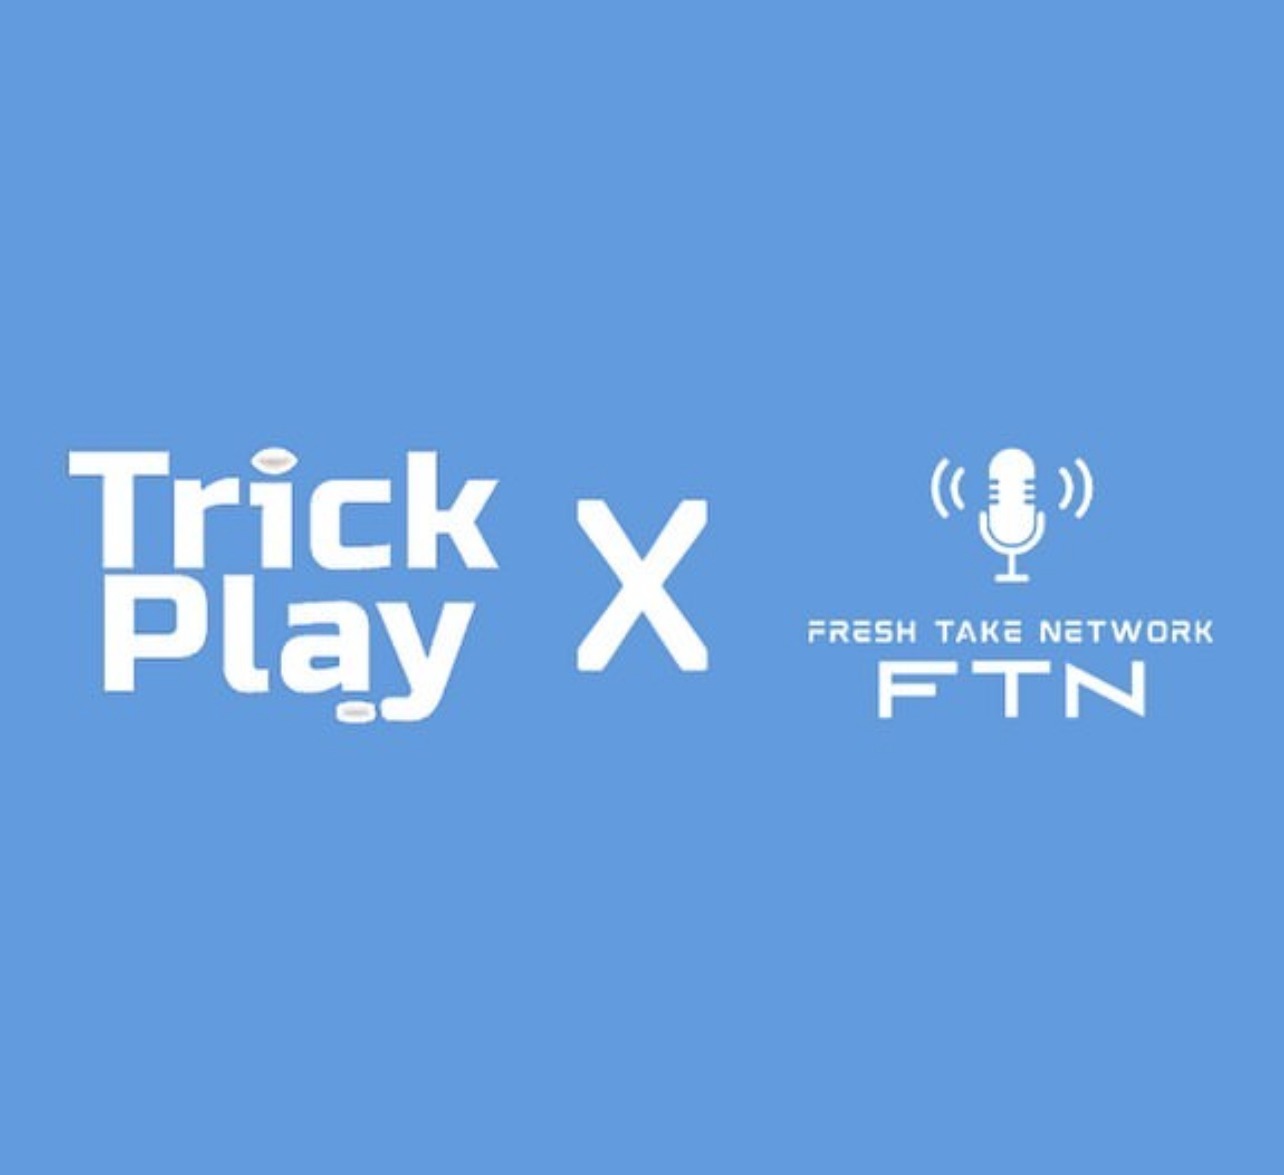 FTN-Trick Play- NHL Preseason NFL Week 3